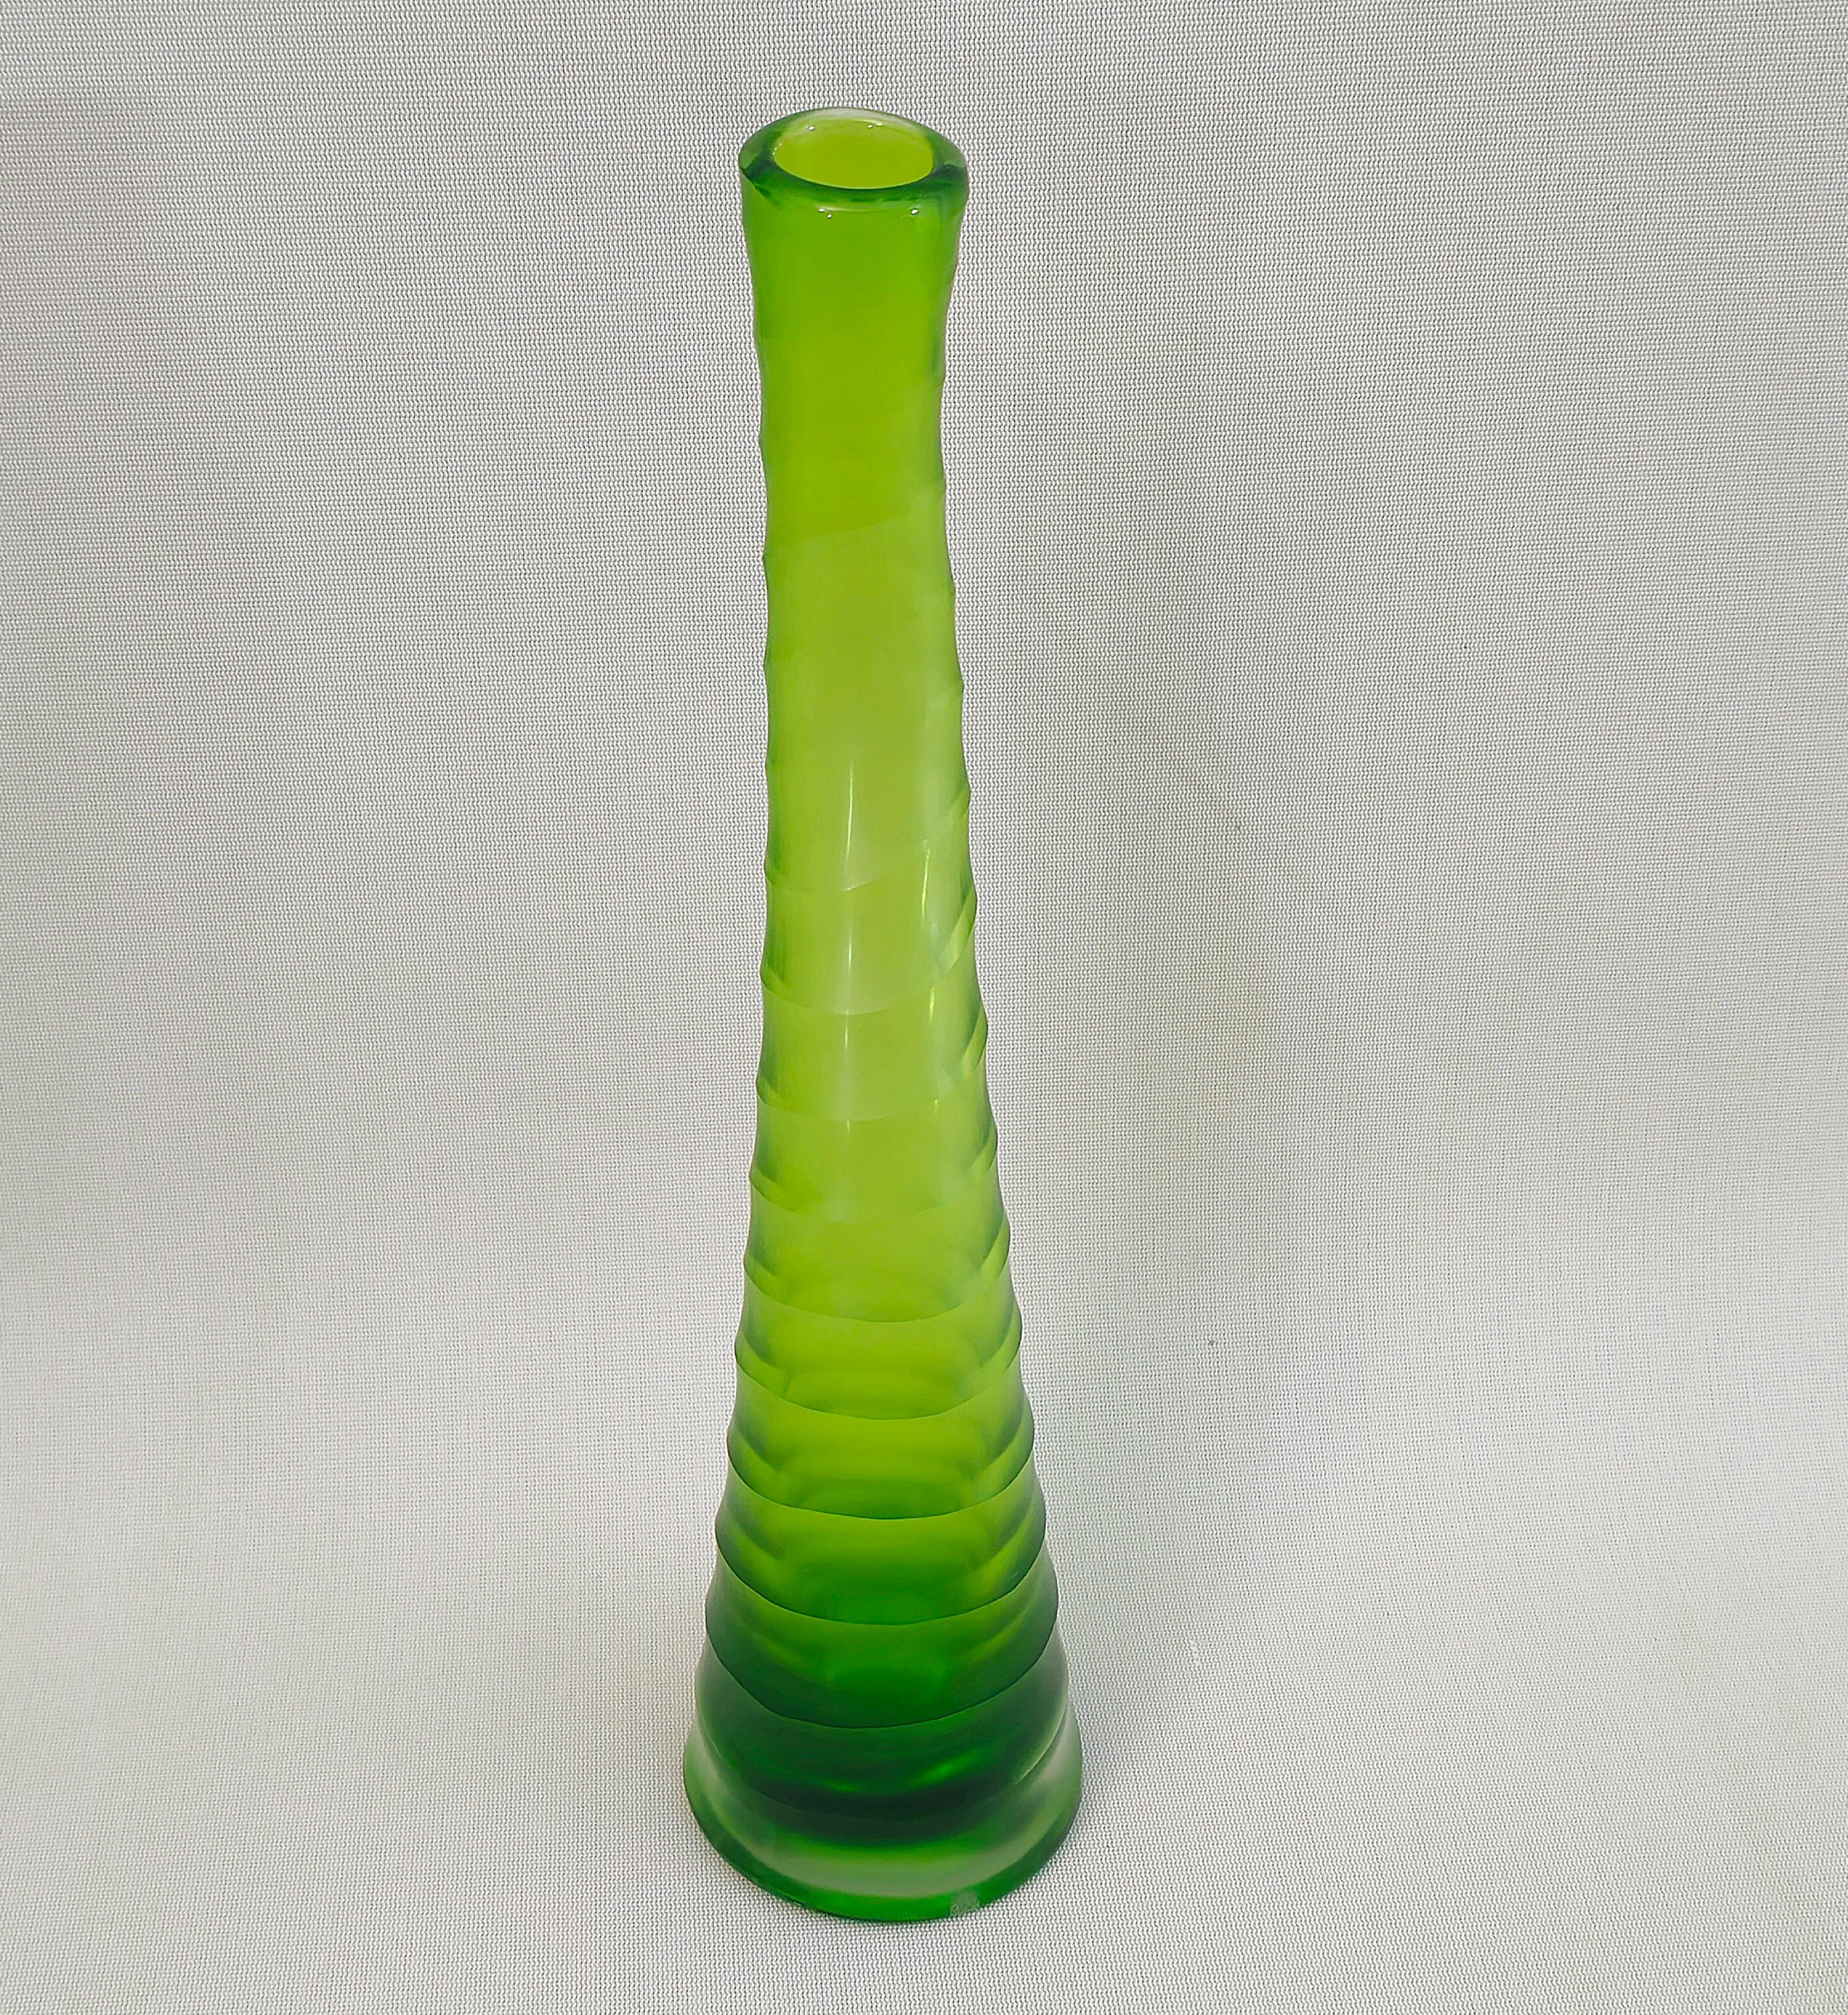 Vase Decorative Object Murano Glass Green Midcentury Modern Italian Design 1970s For Sale 2